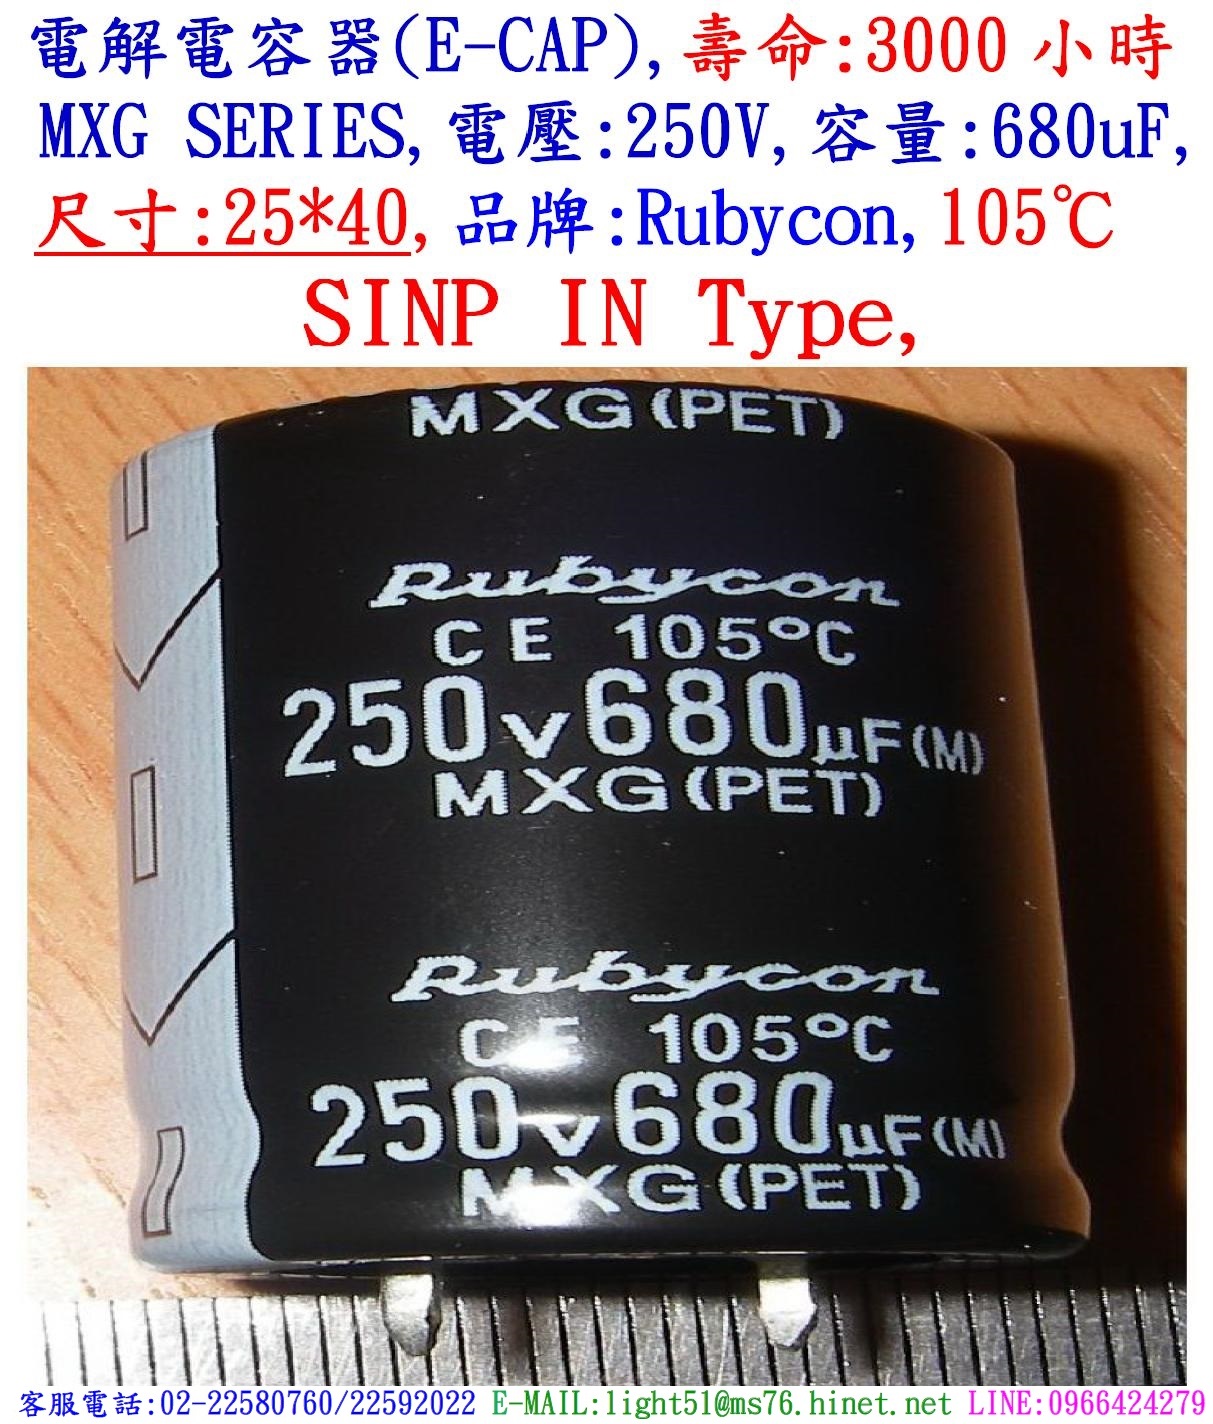 MXG,250V,680uF,尺寸:25*40,電解電容器,壽命:3000小時,Rubycon